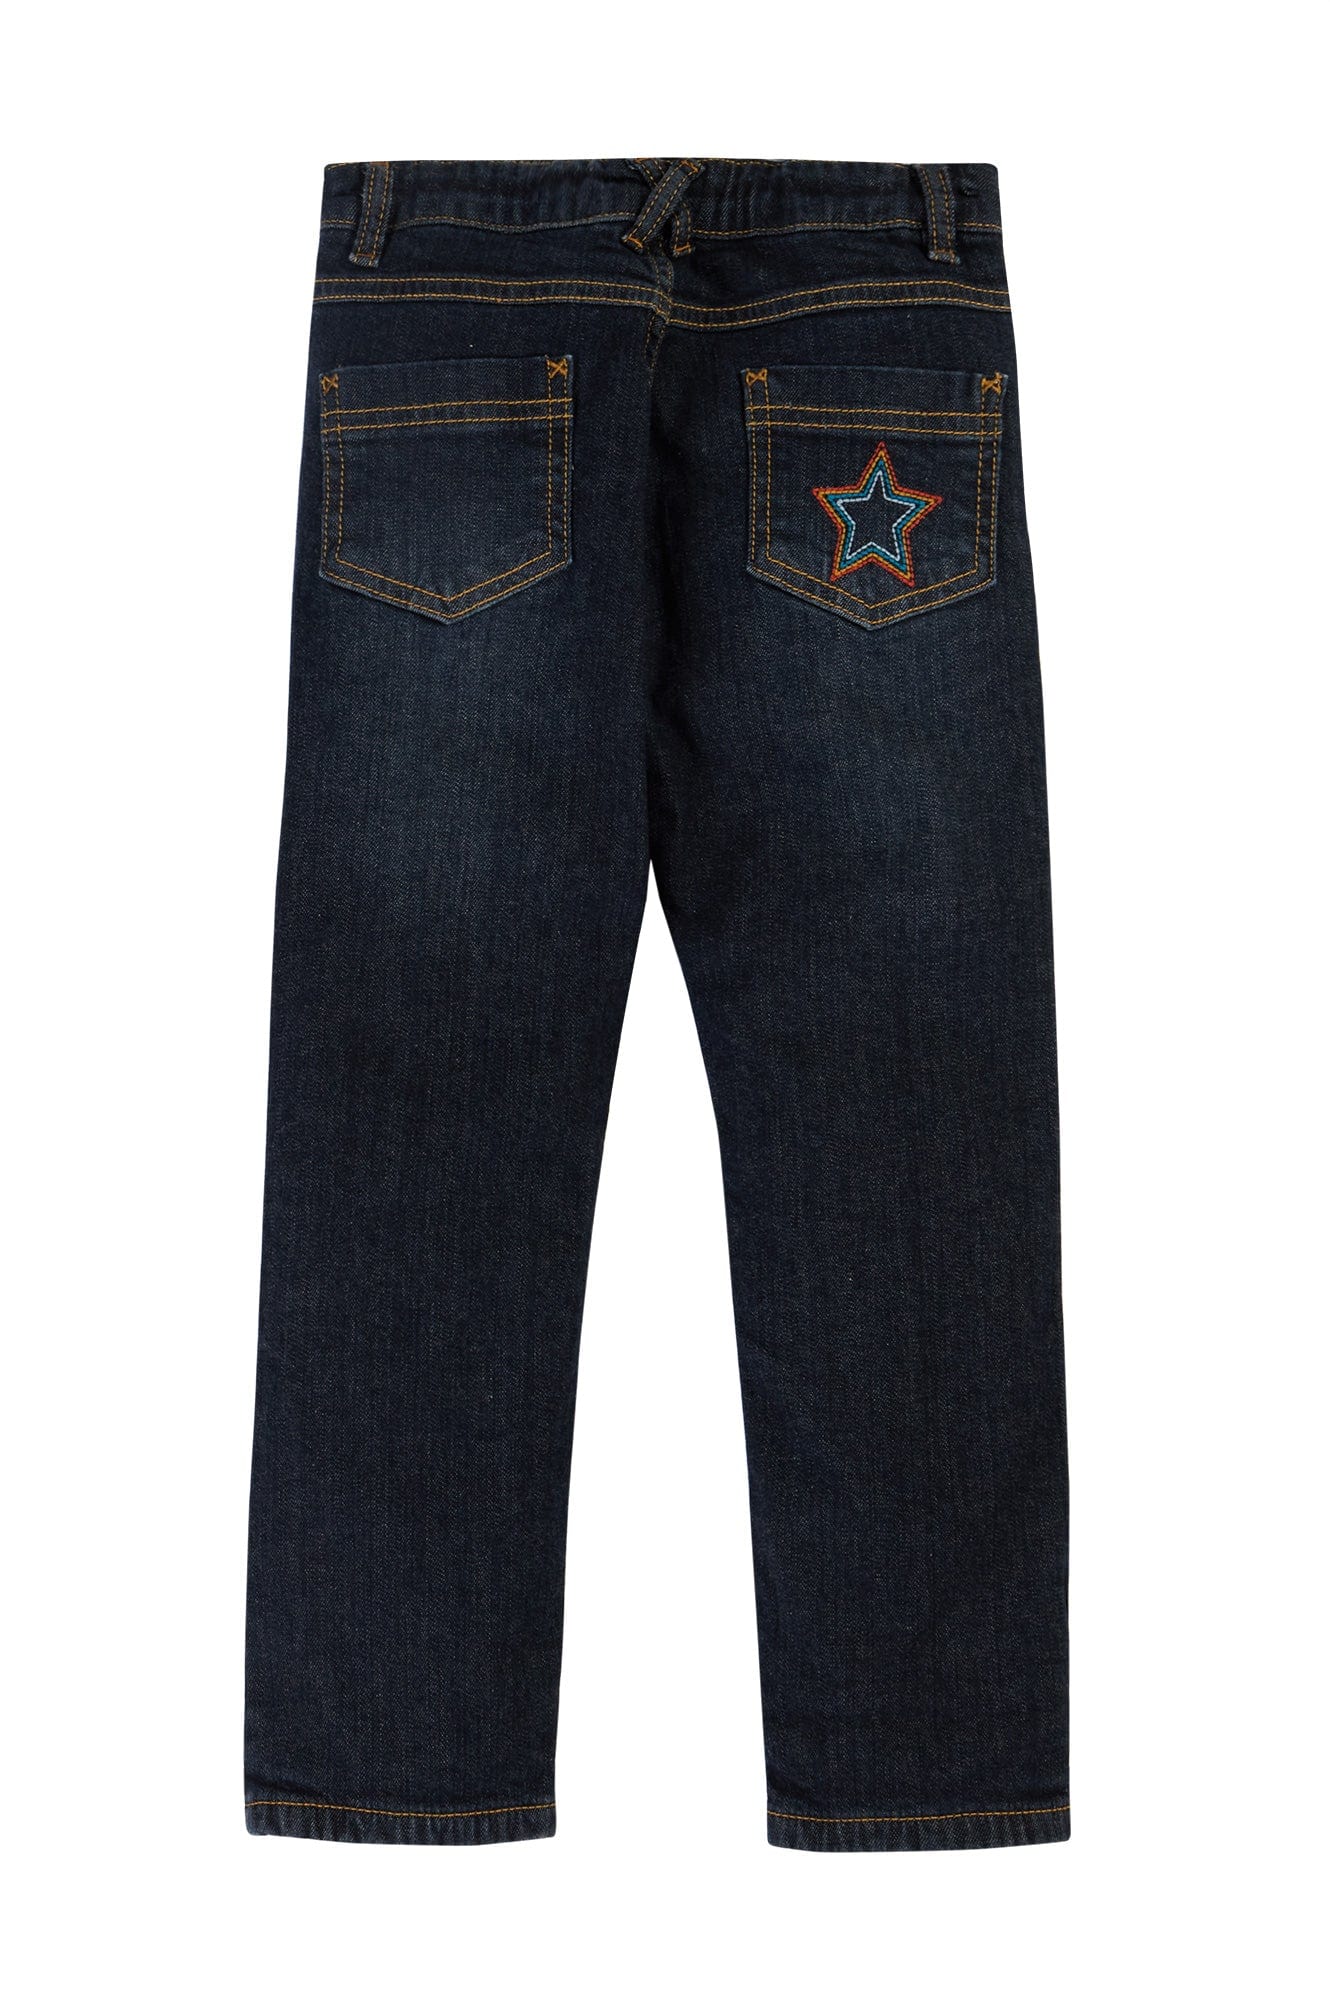 Lumberjack Lined Jeans